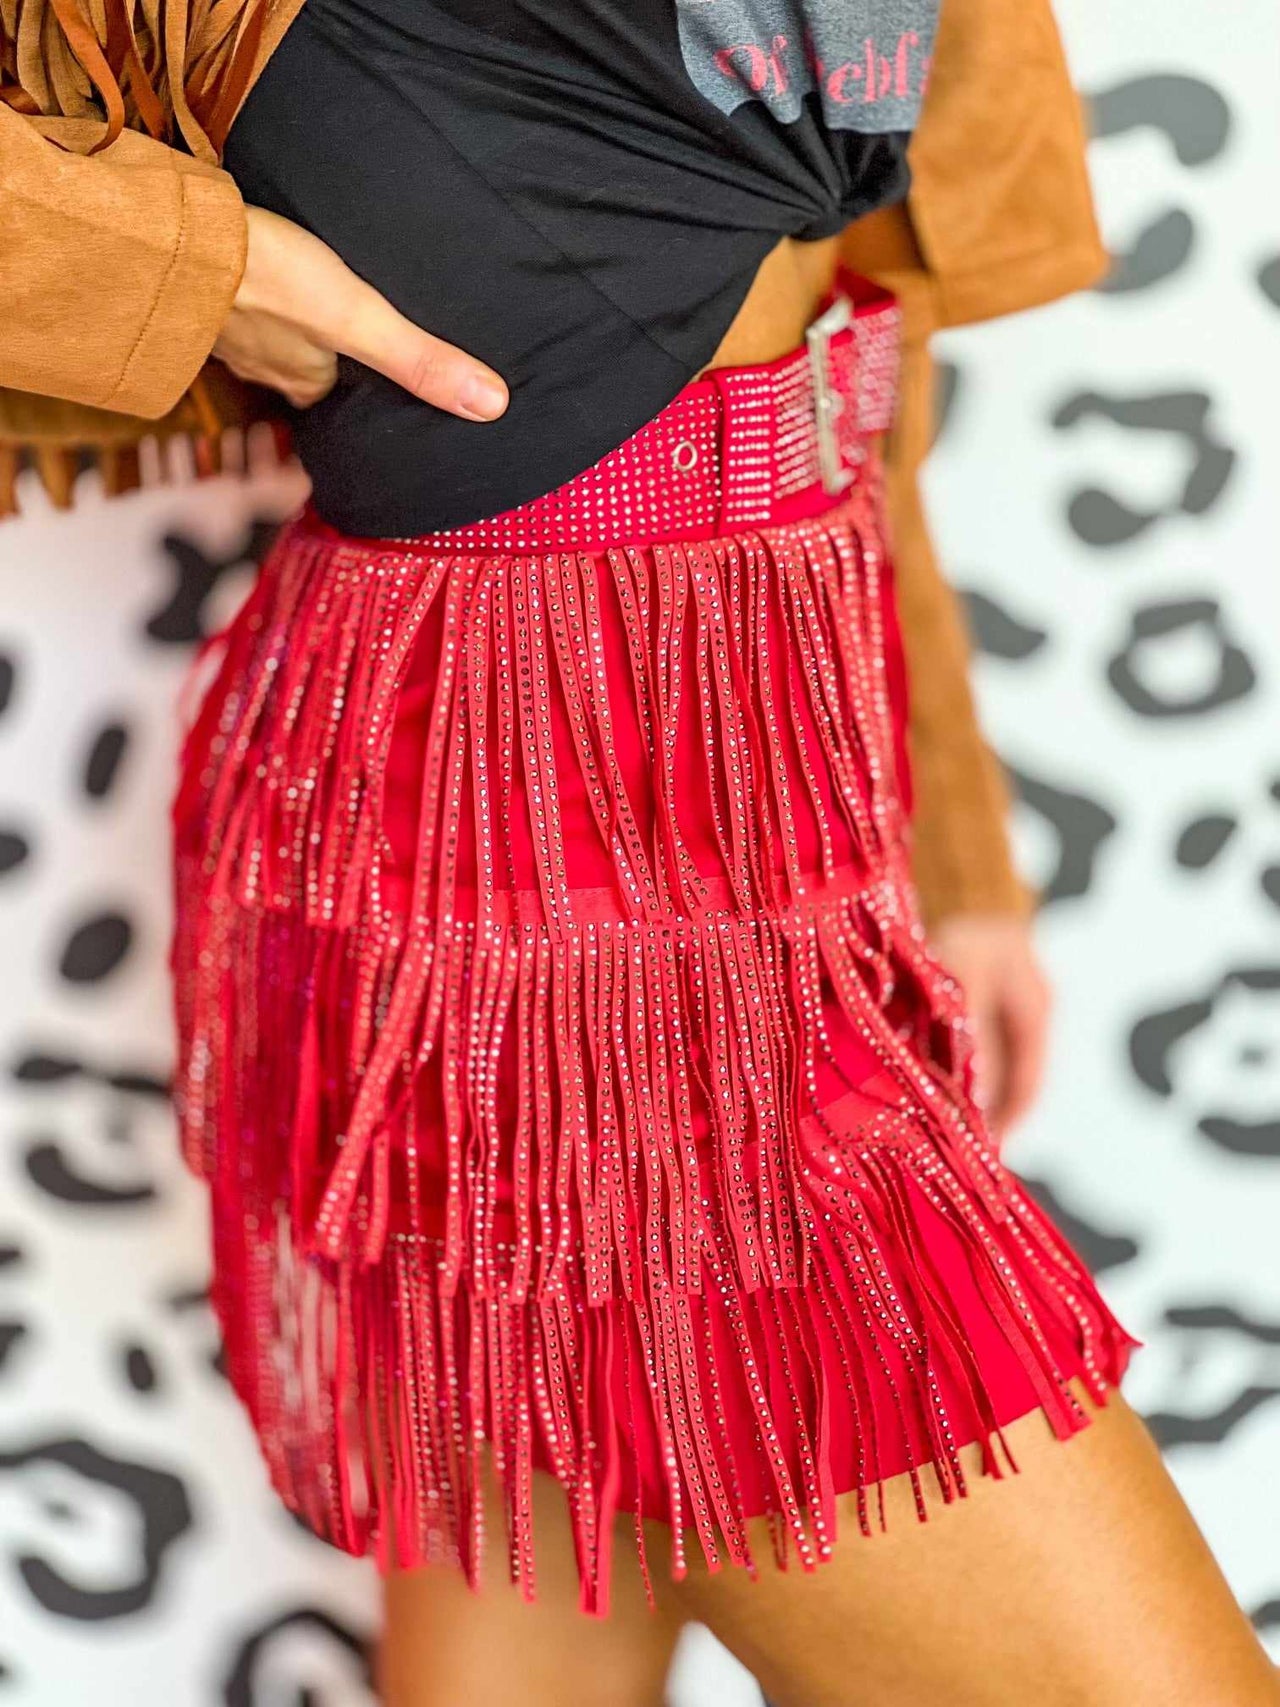 Red western style fringe mini skirt.